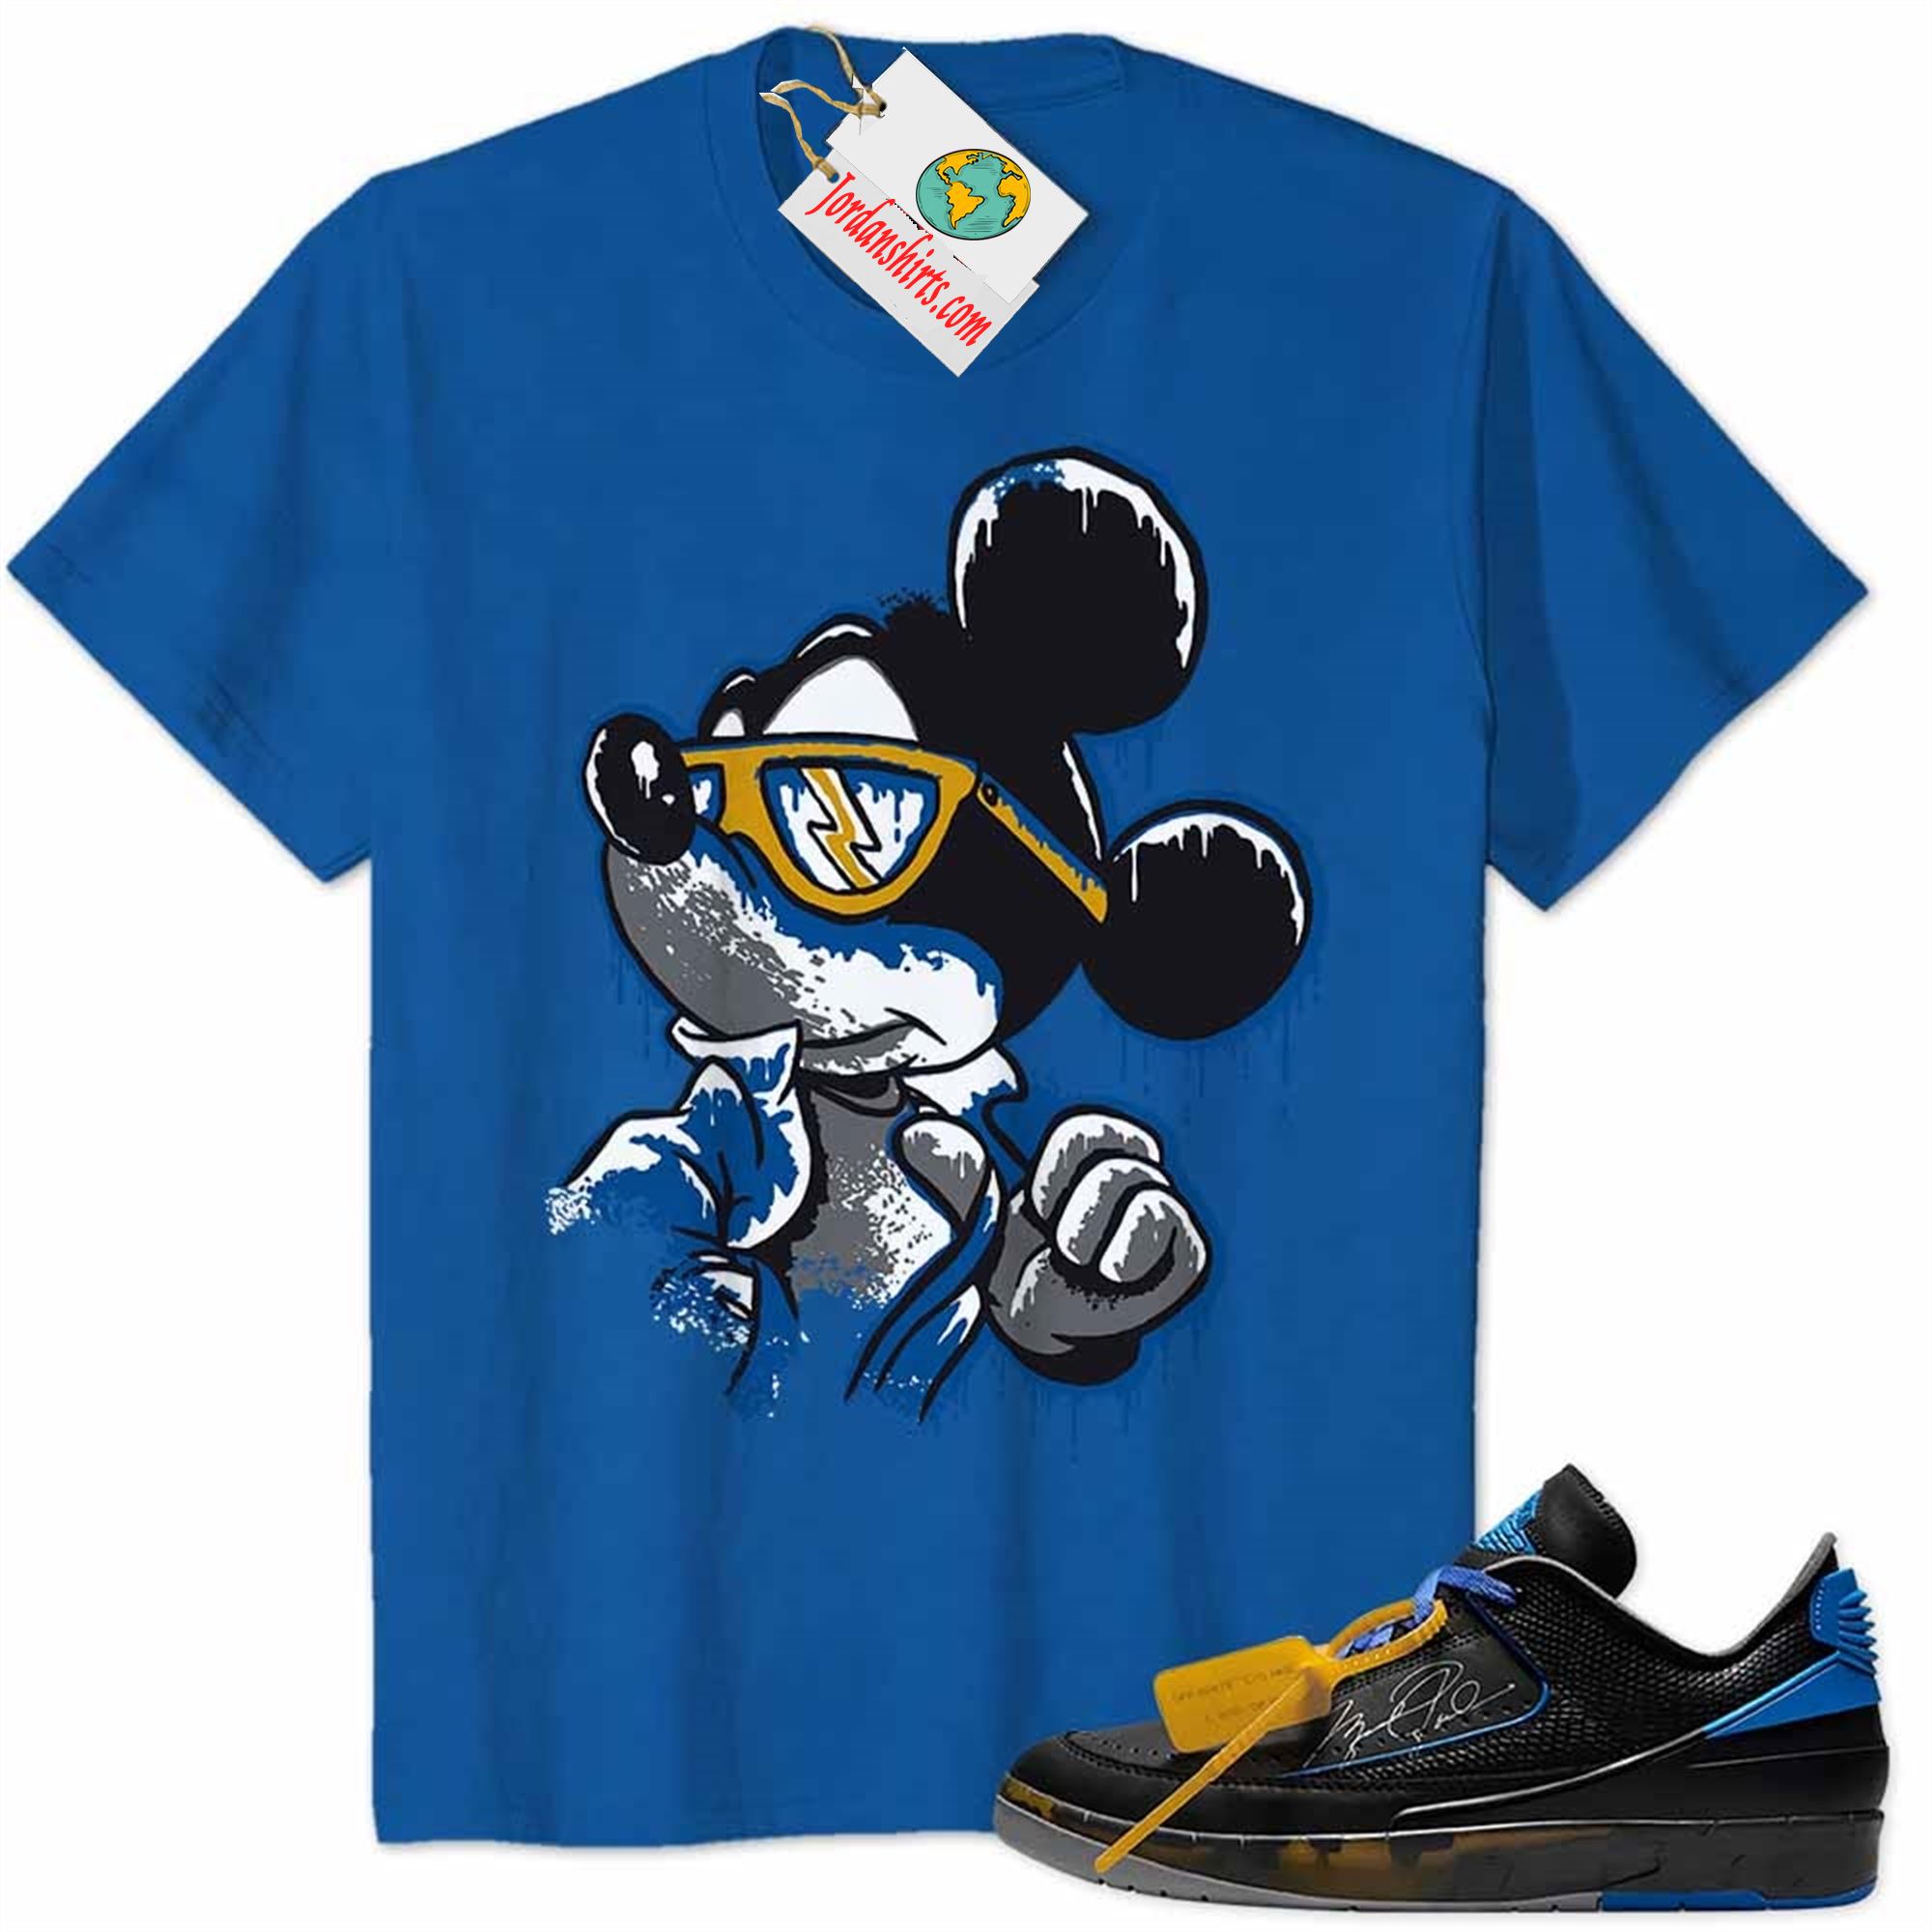 Jordan 2 Shirt, Mickey Dripping Graphic Blue Air Jordan 2 Low X Off-white Black And Varsity Royal 2s Size Up To 5xl